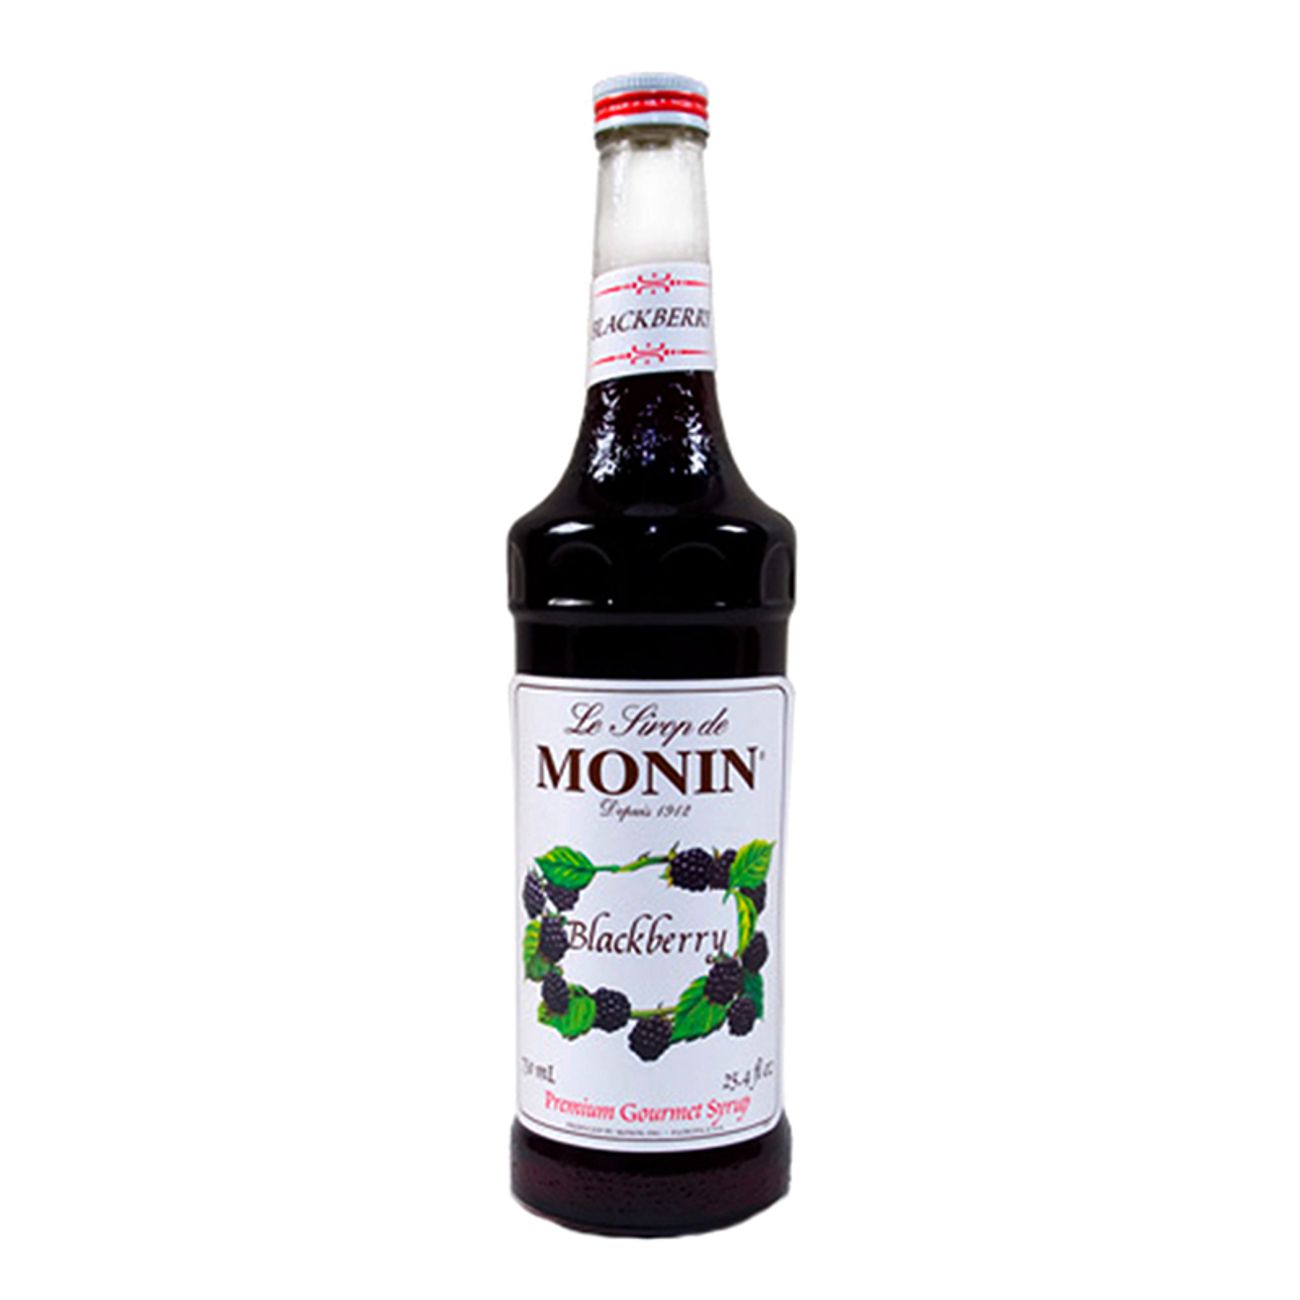 monin-bjornbar-drinkmix-1